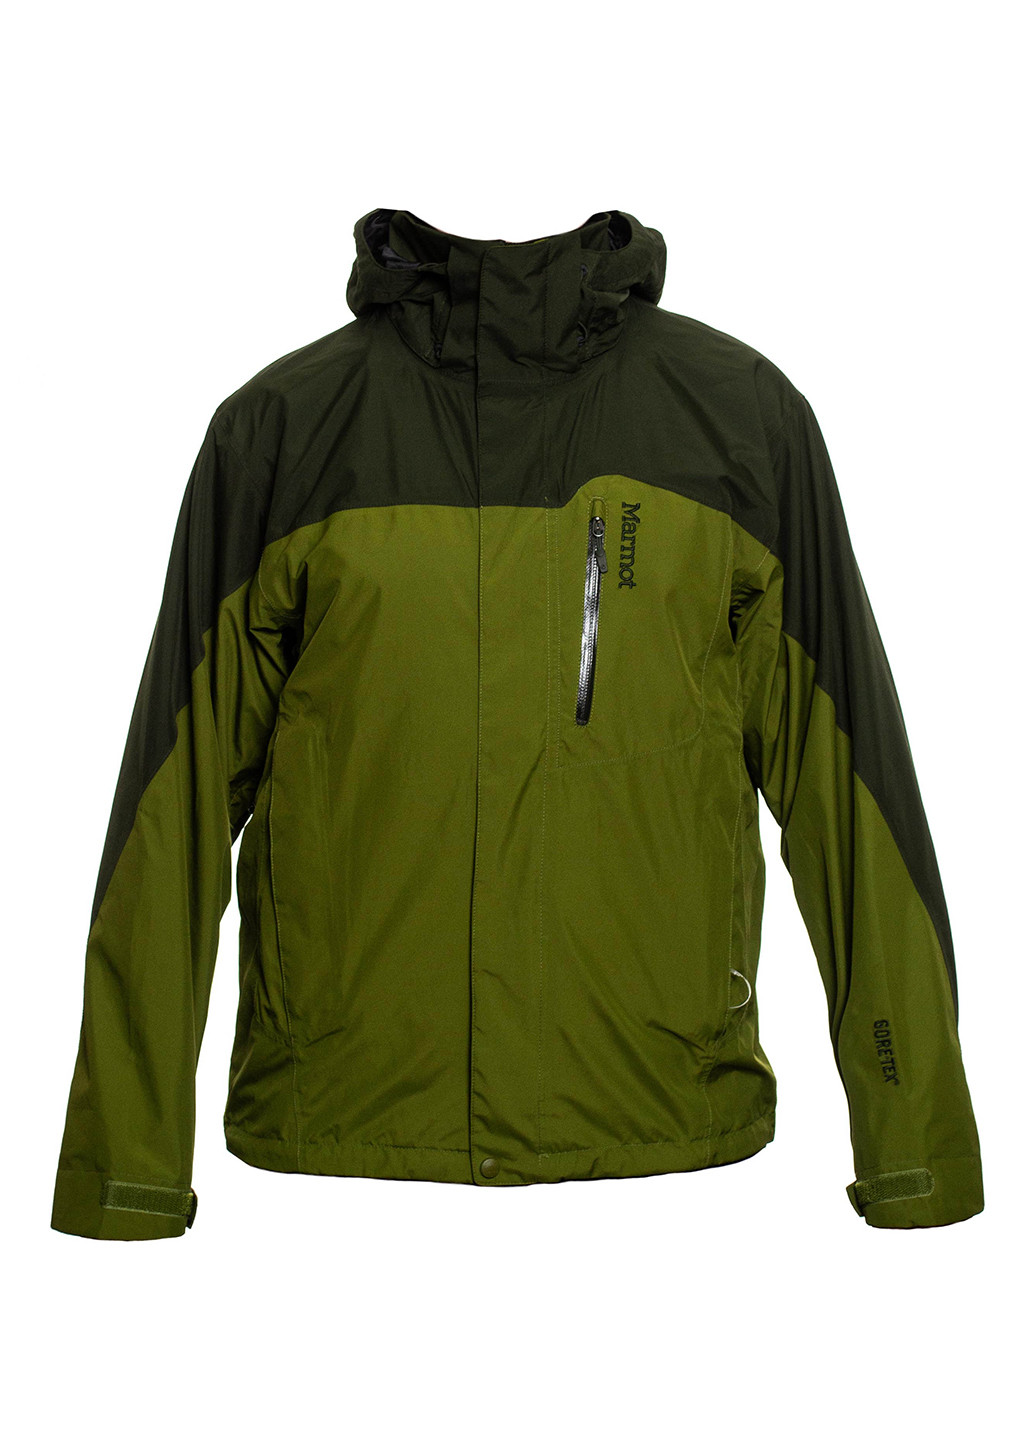 Зелена зимня куртка лижна Marmot